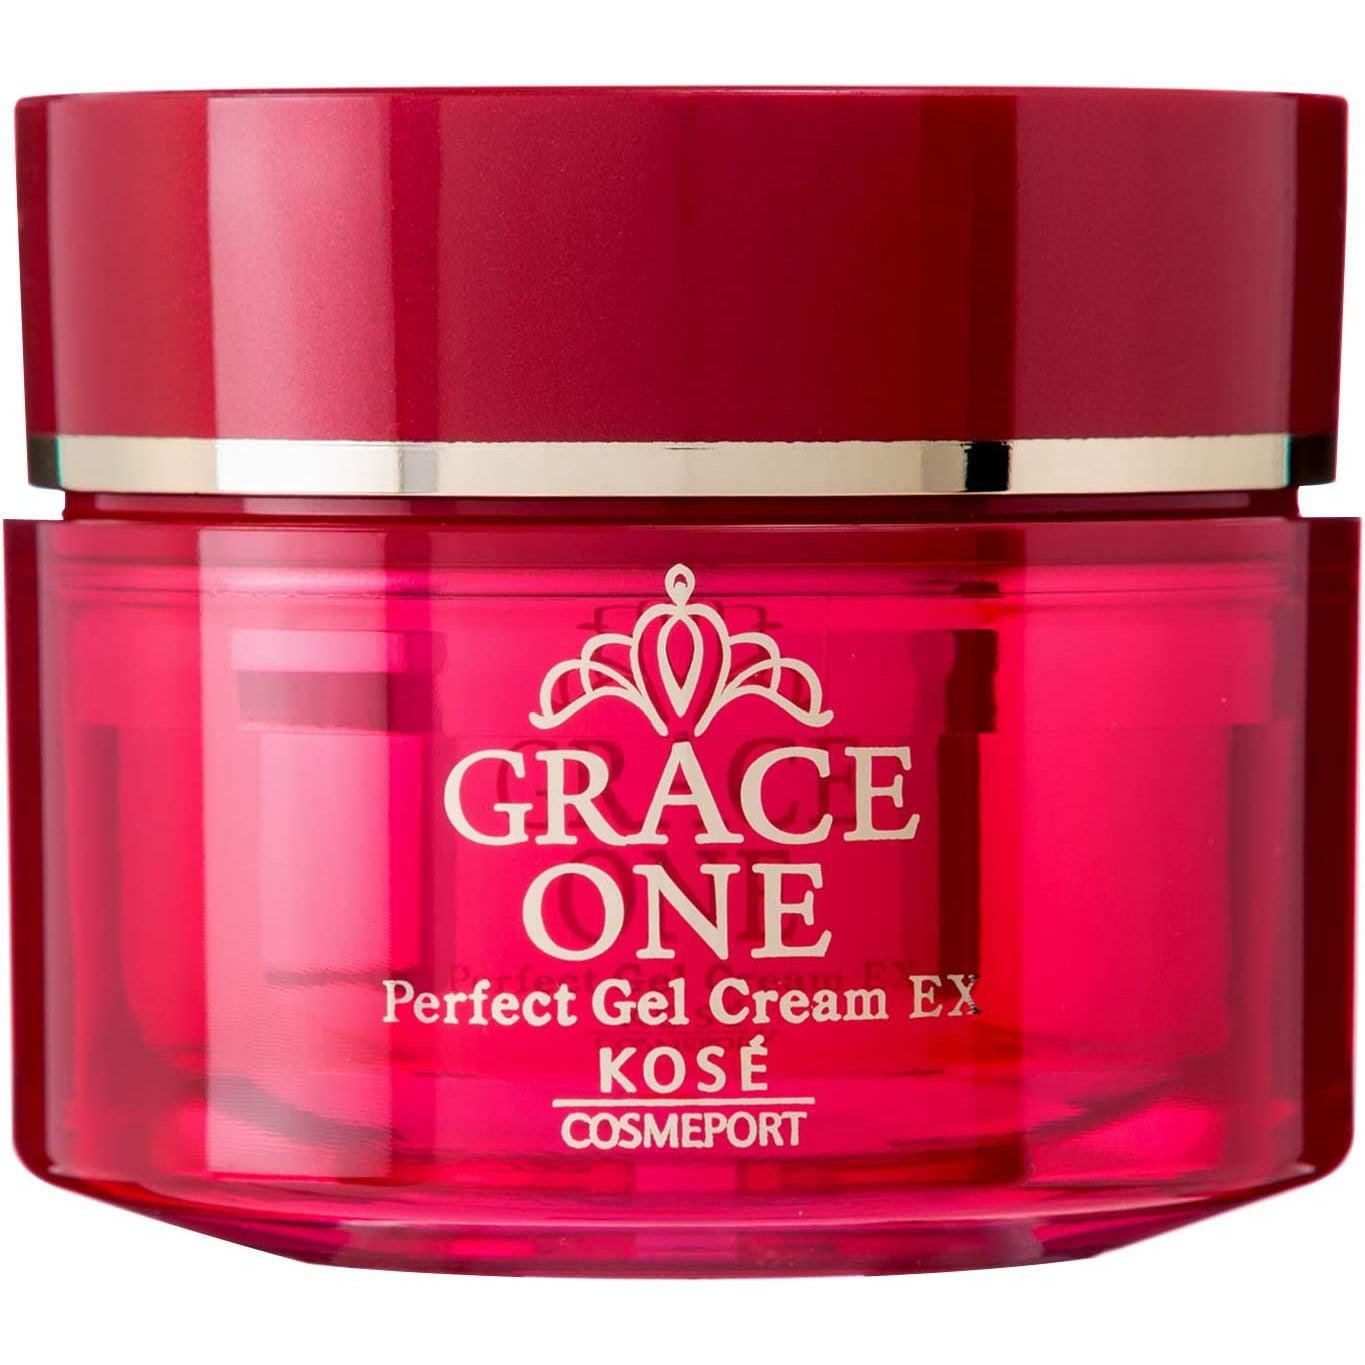 Kose Grace One Perfect Gel Cream Ex 100g